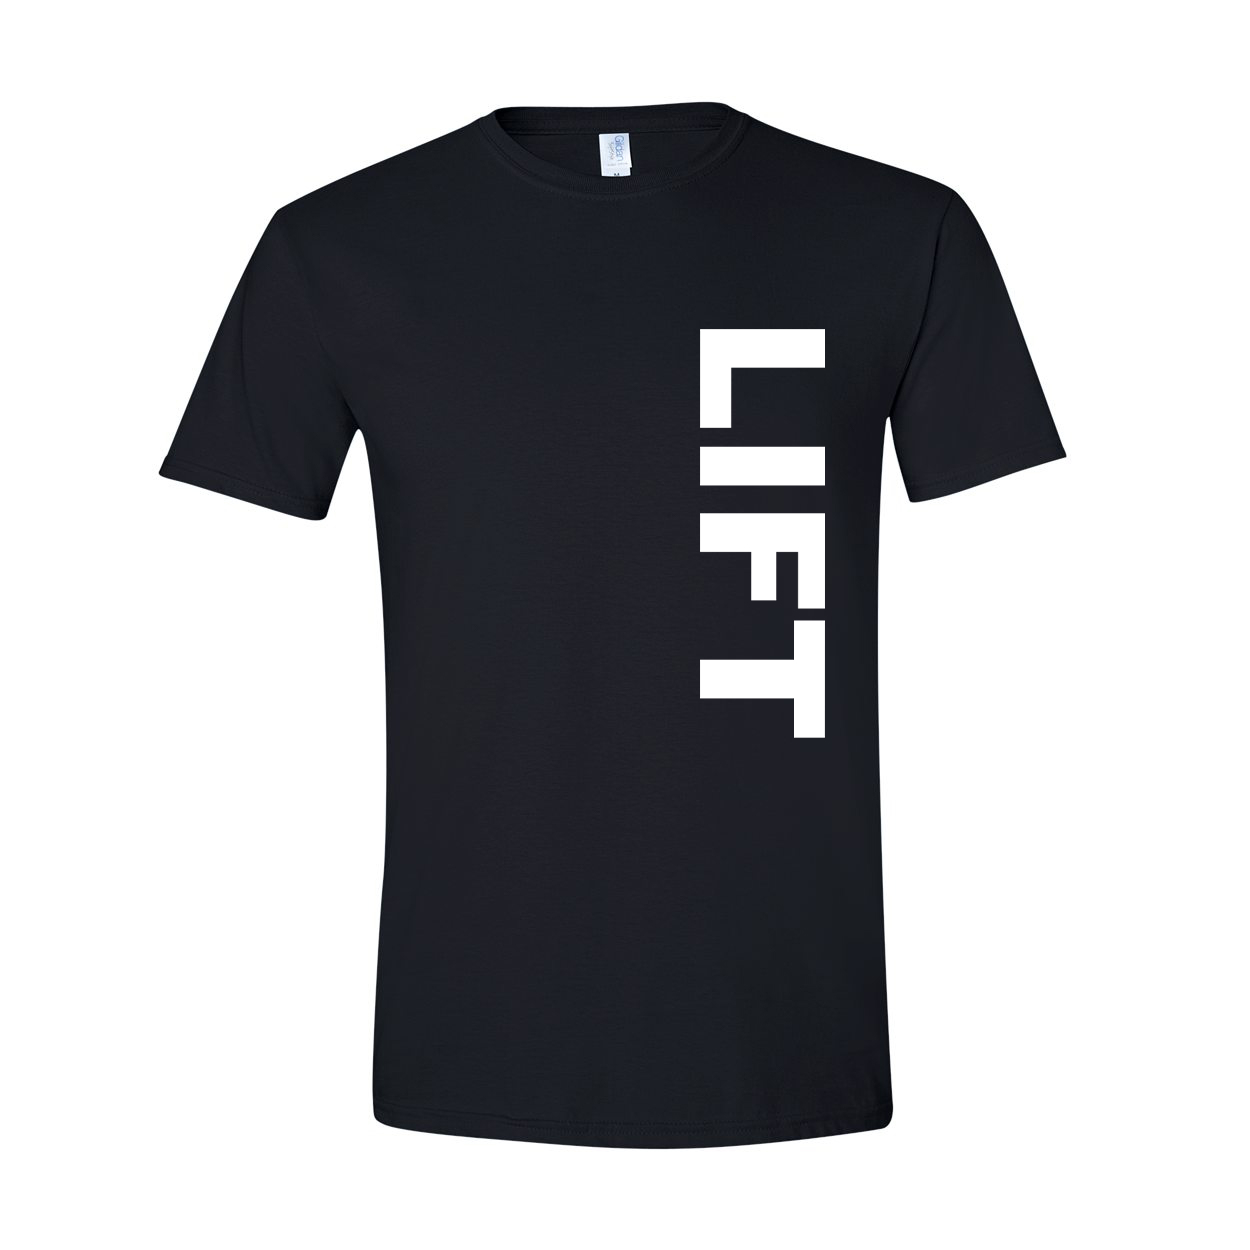 Lift Brand Logo Classic Vertical T-Shirt Black (White Logo)